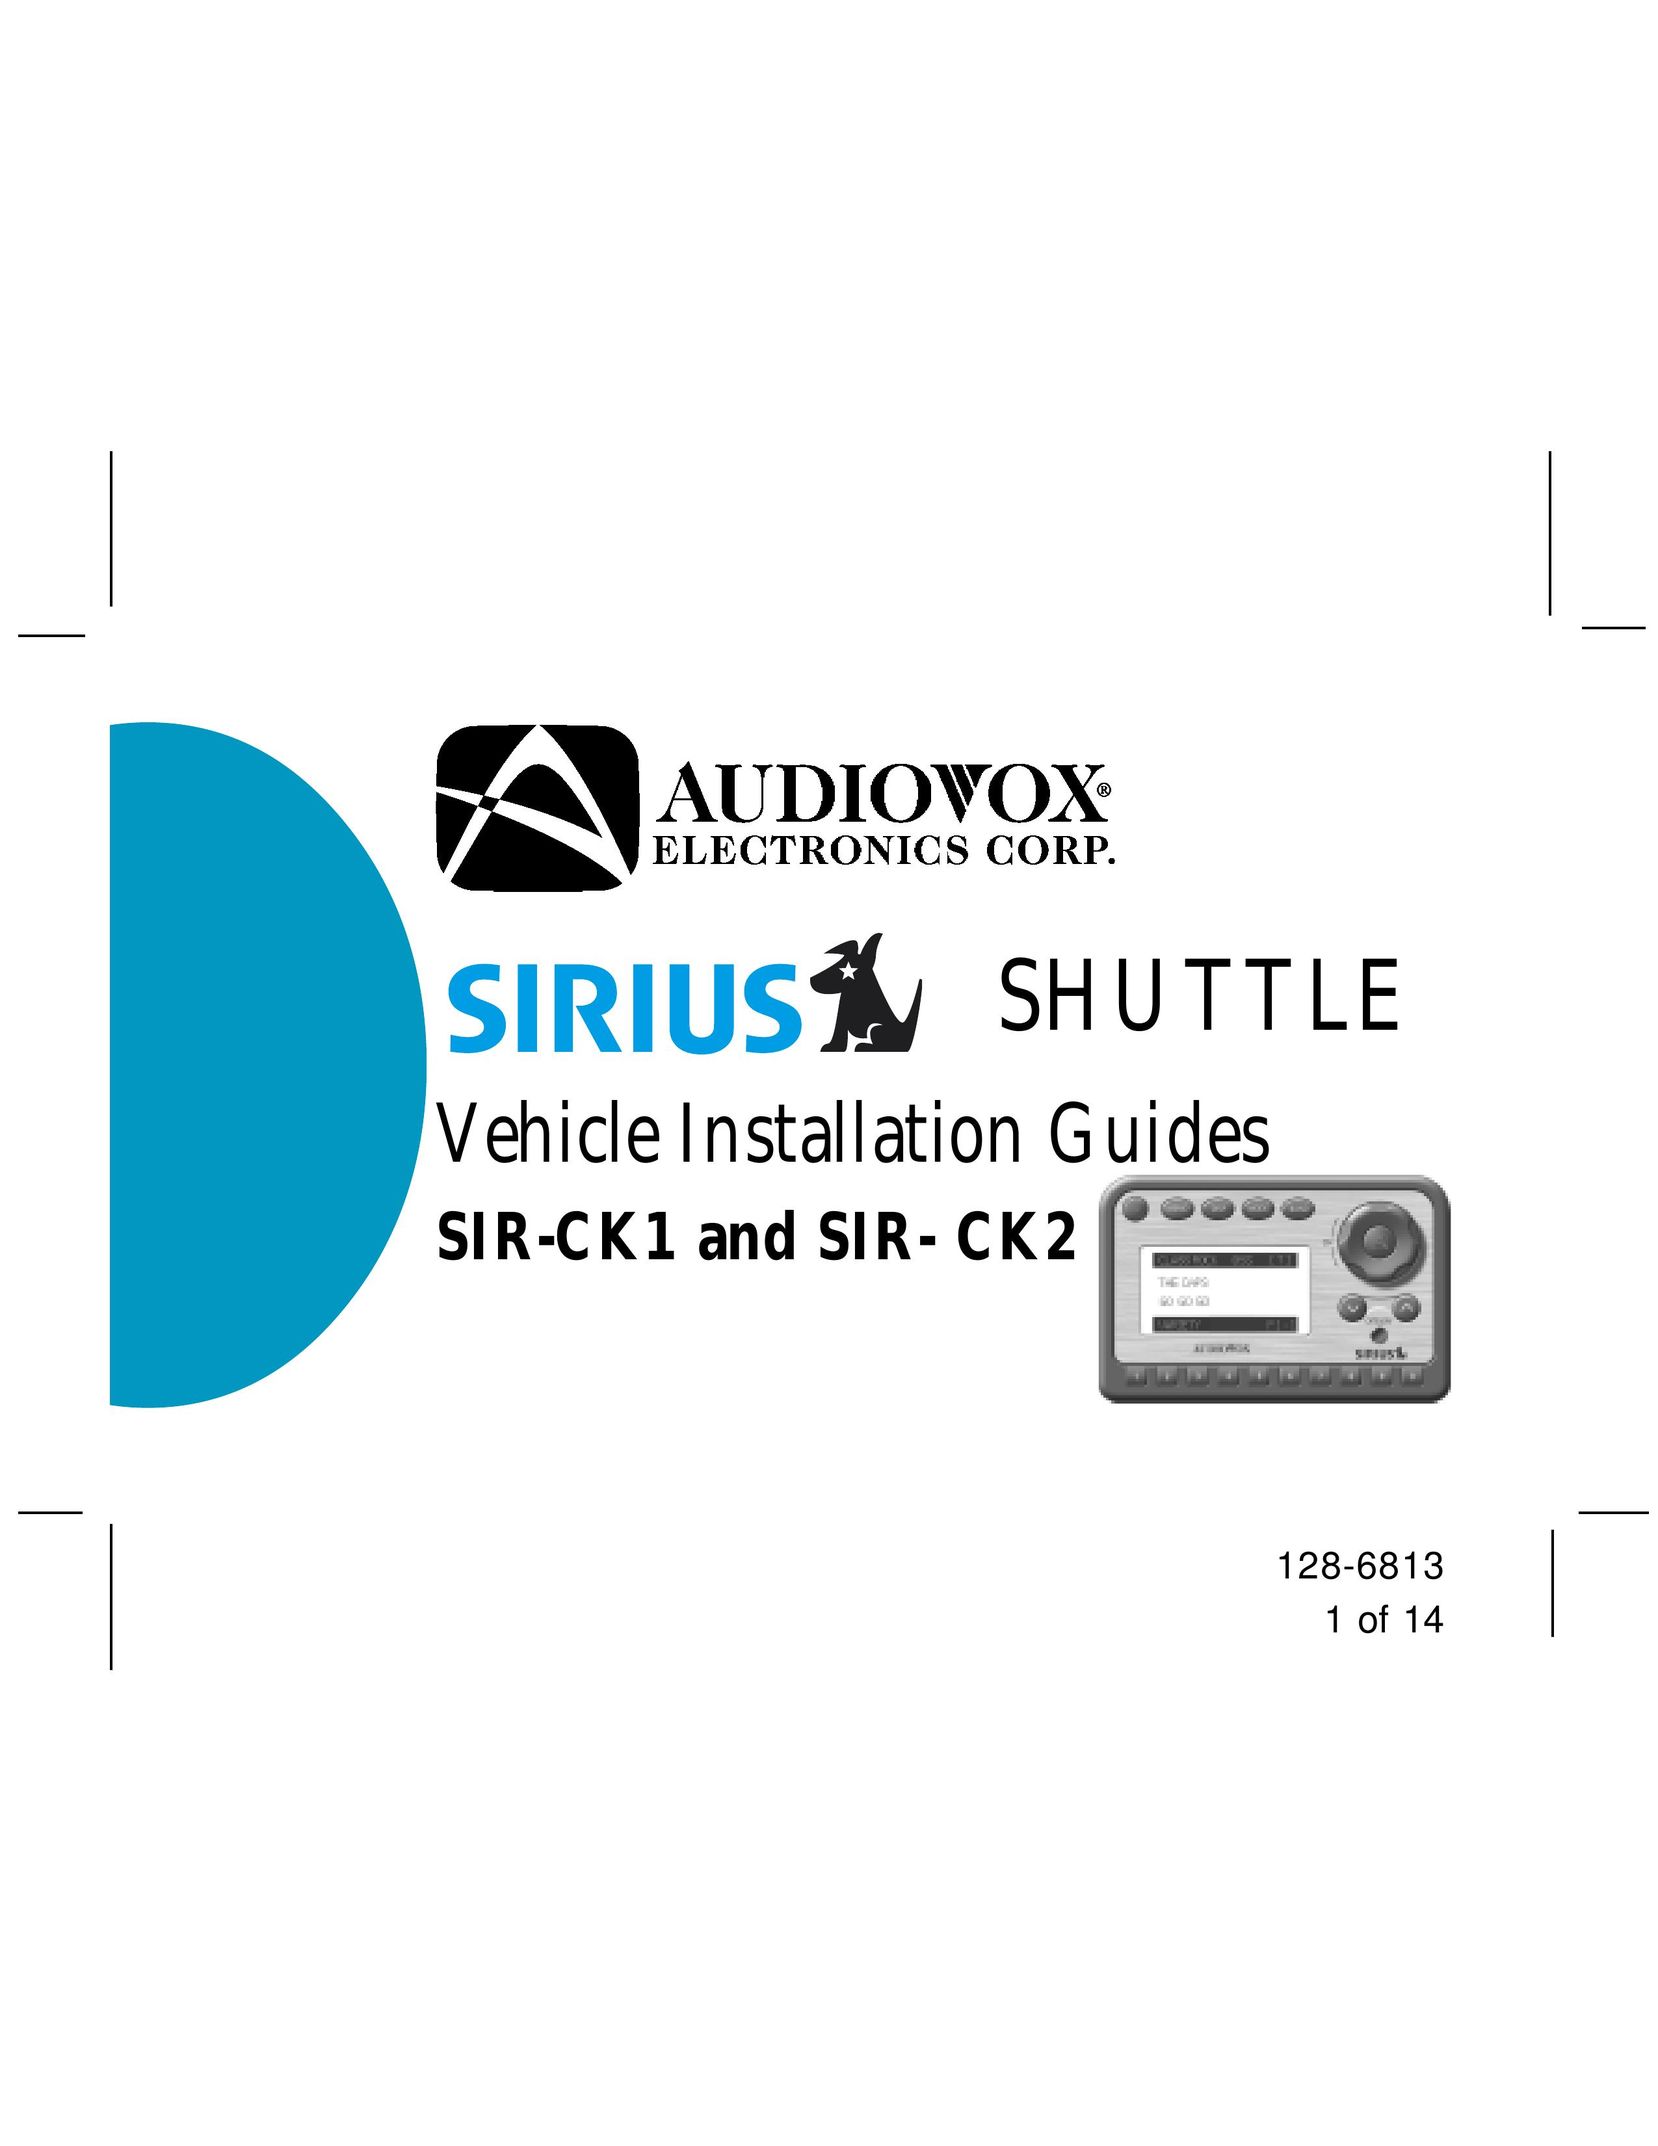 Audiovox SIR-CK2 Car Satellite Radio System User Manual